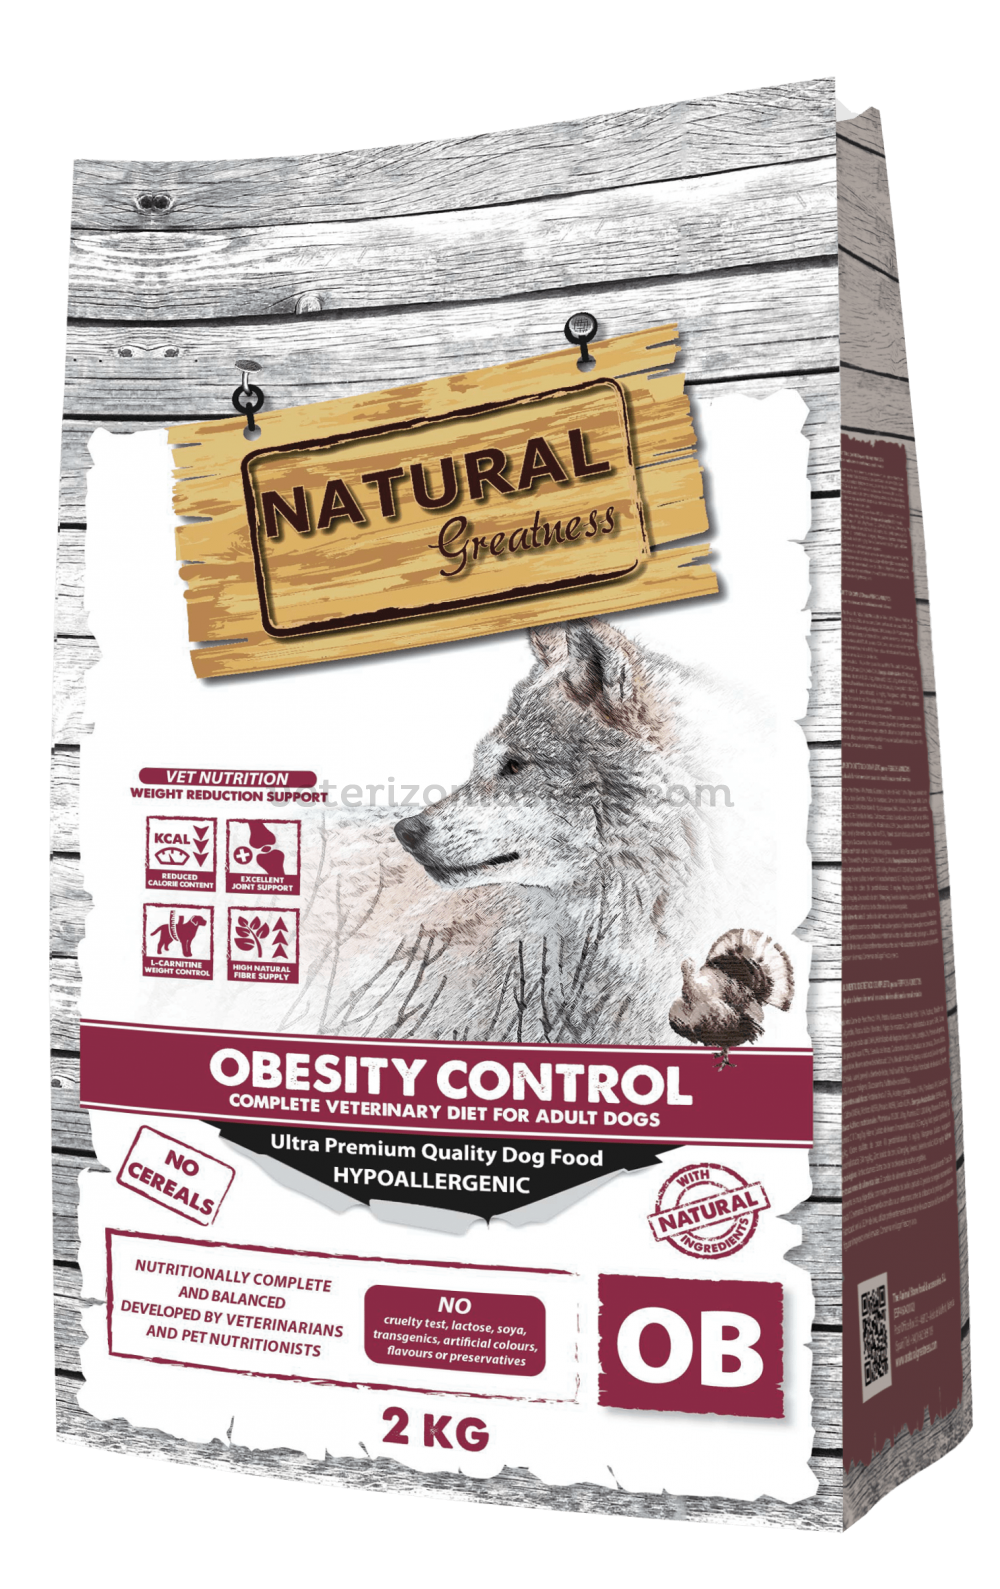 Natural-Greatness-pienso-para-perros-dieta-control-obesidad-